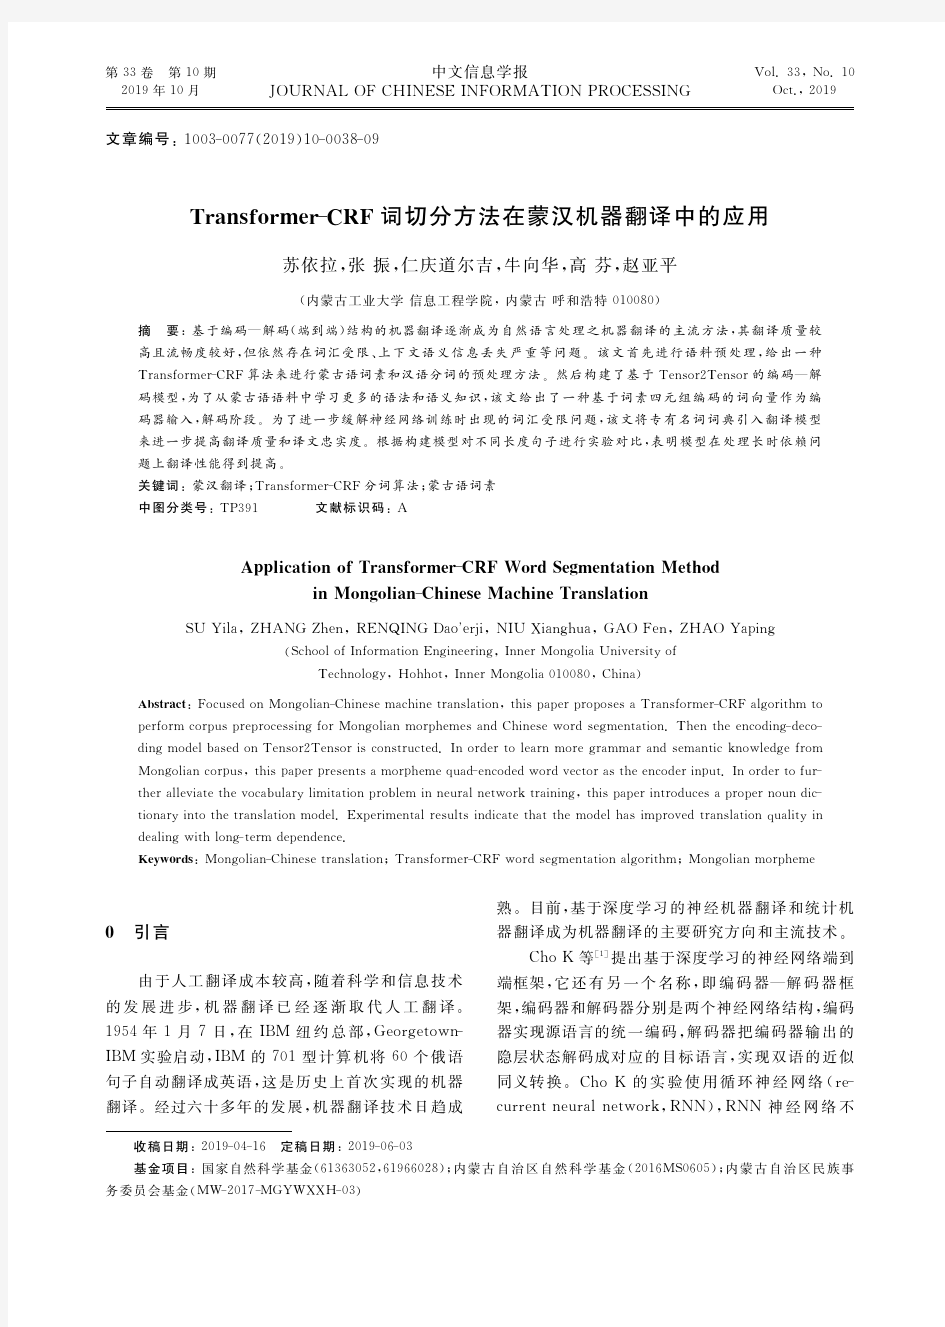 Transformer-CRF词切分方法在蒙汉机器翻译中的应用